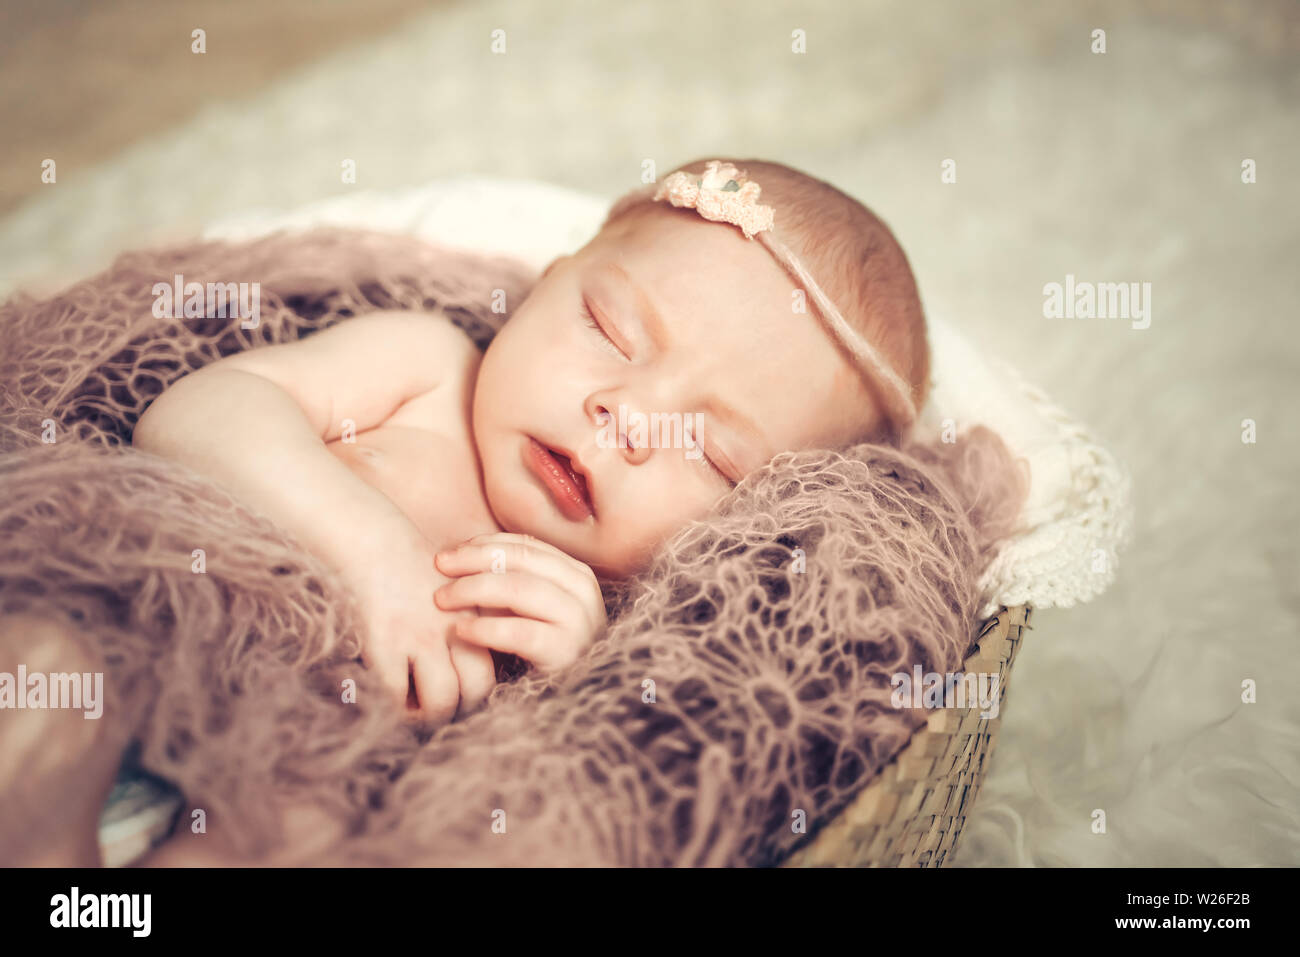 Newborn baby girl sleeping in a basket. Concept shooting newborns, innocence. Stock Photo